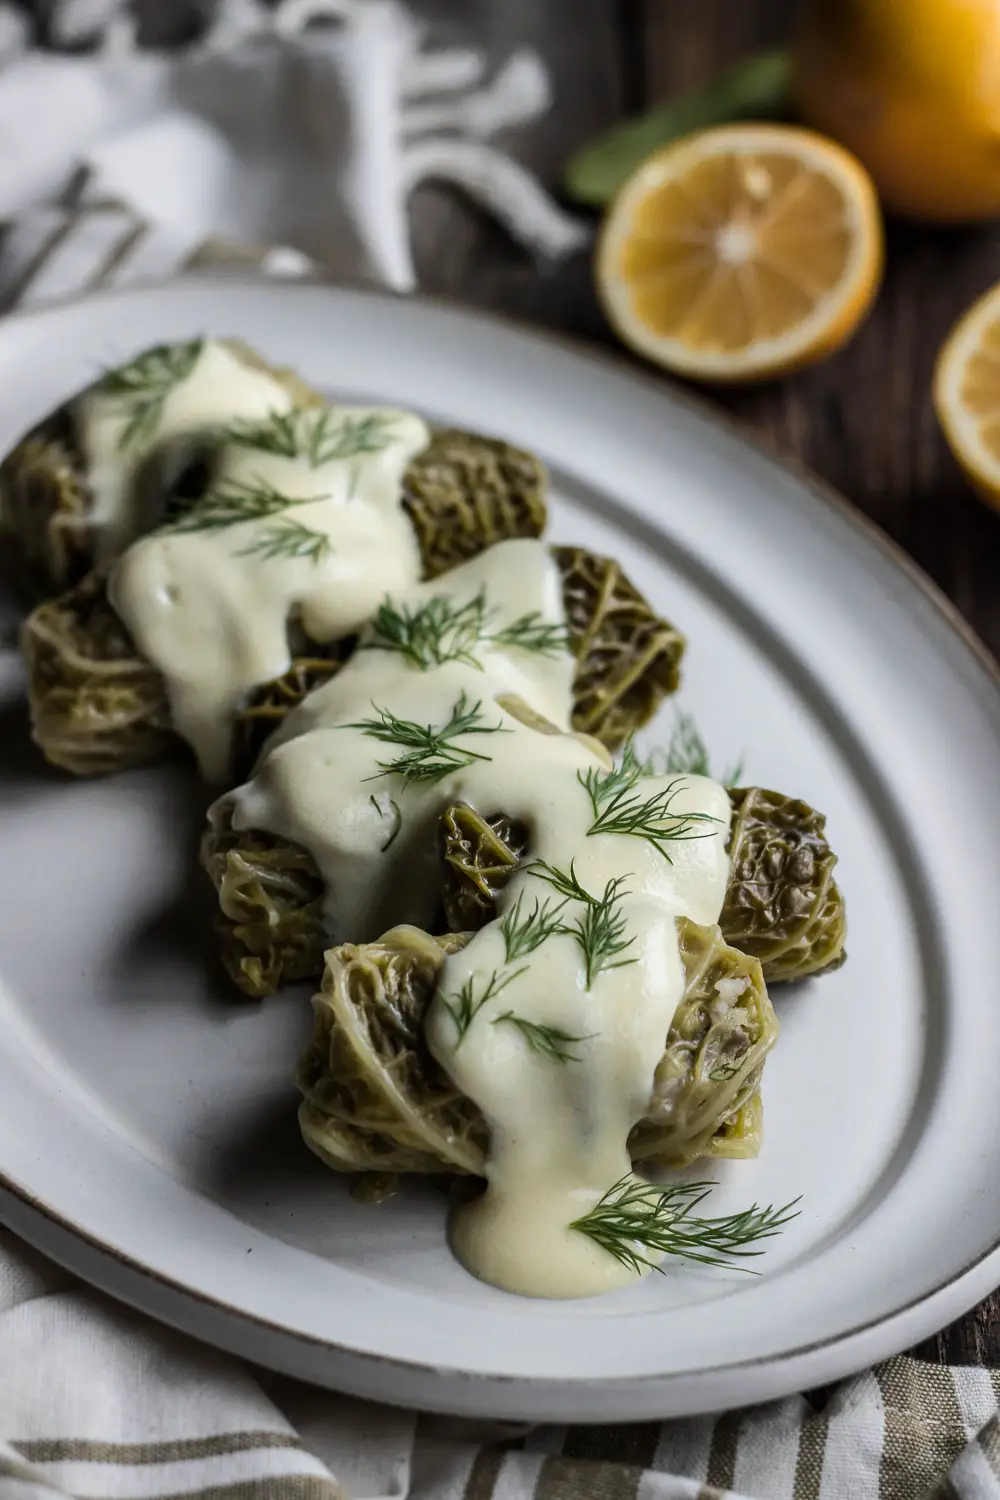 lahanodolmades - greek cabbage rolls